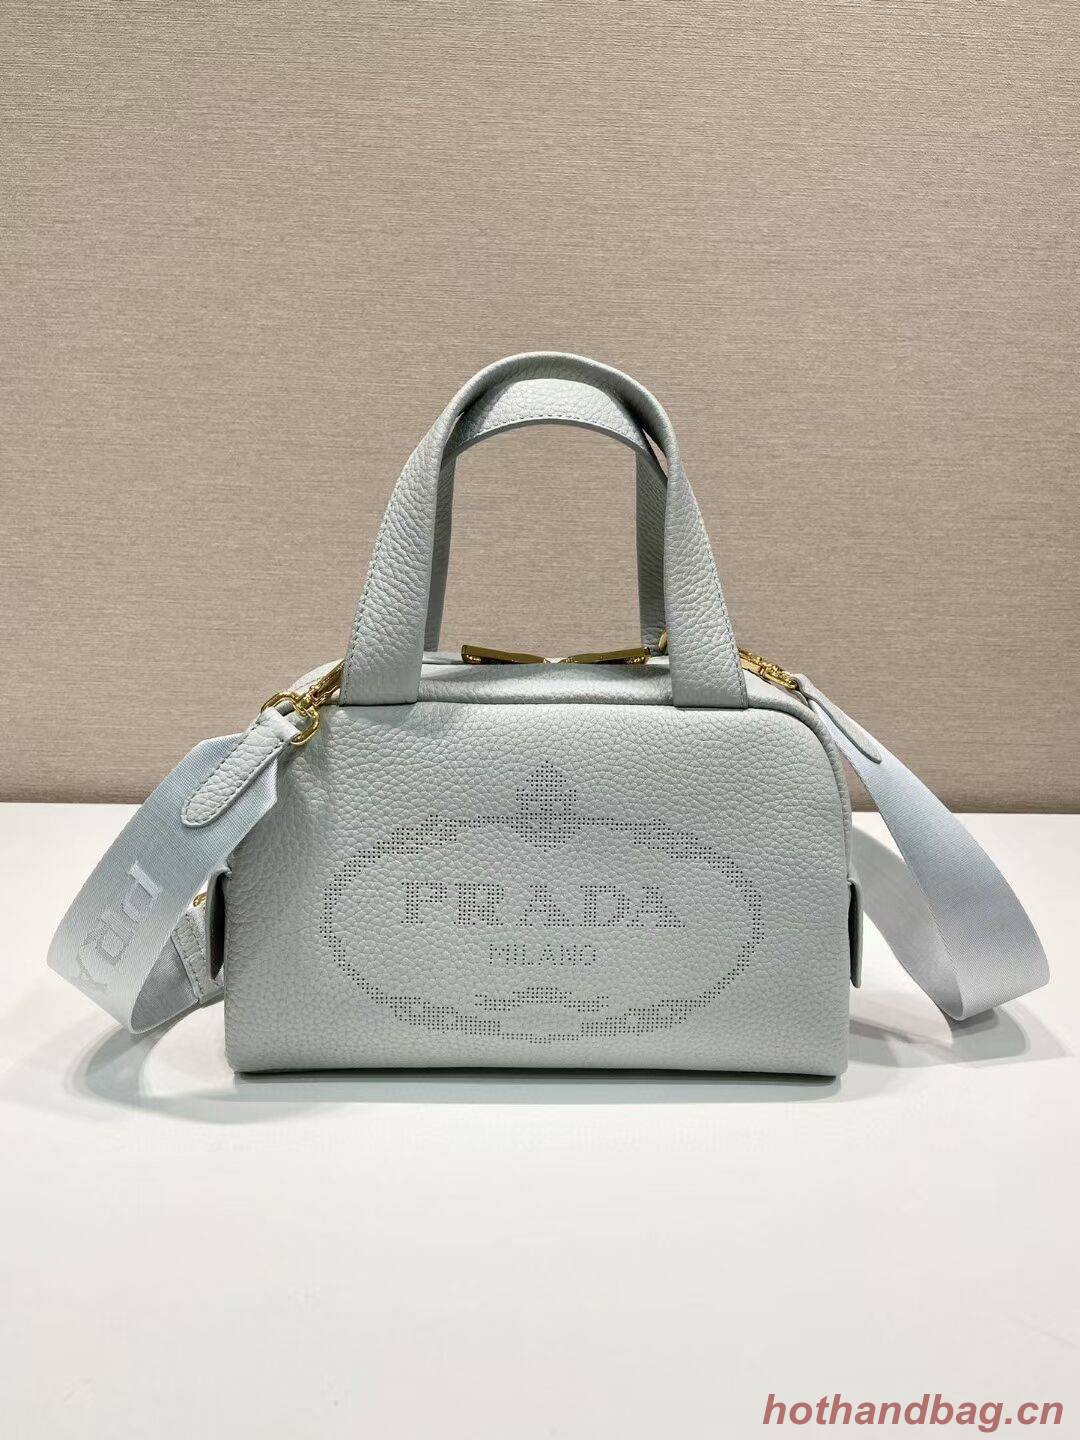 Prada leather tote bag 1DH770 light blue